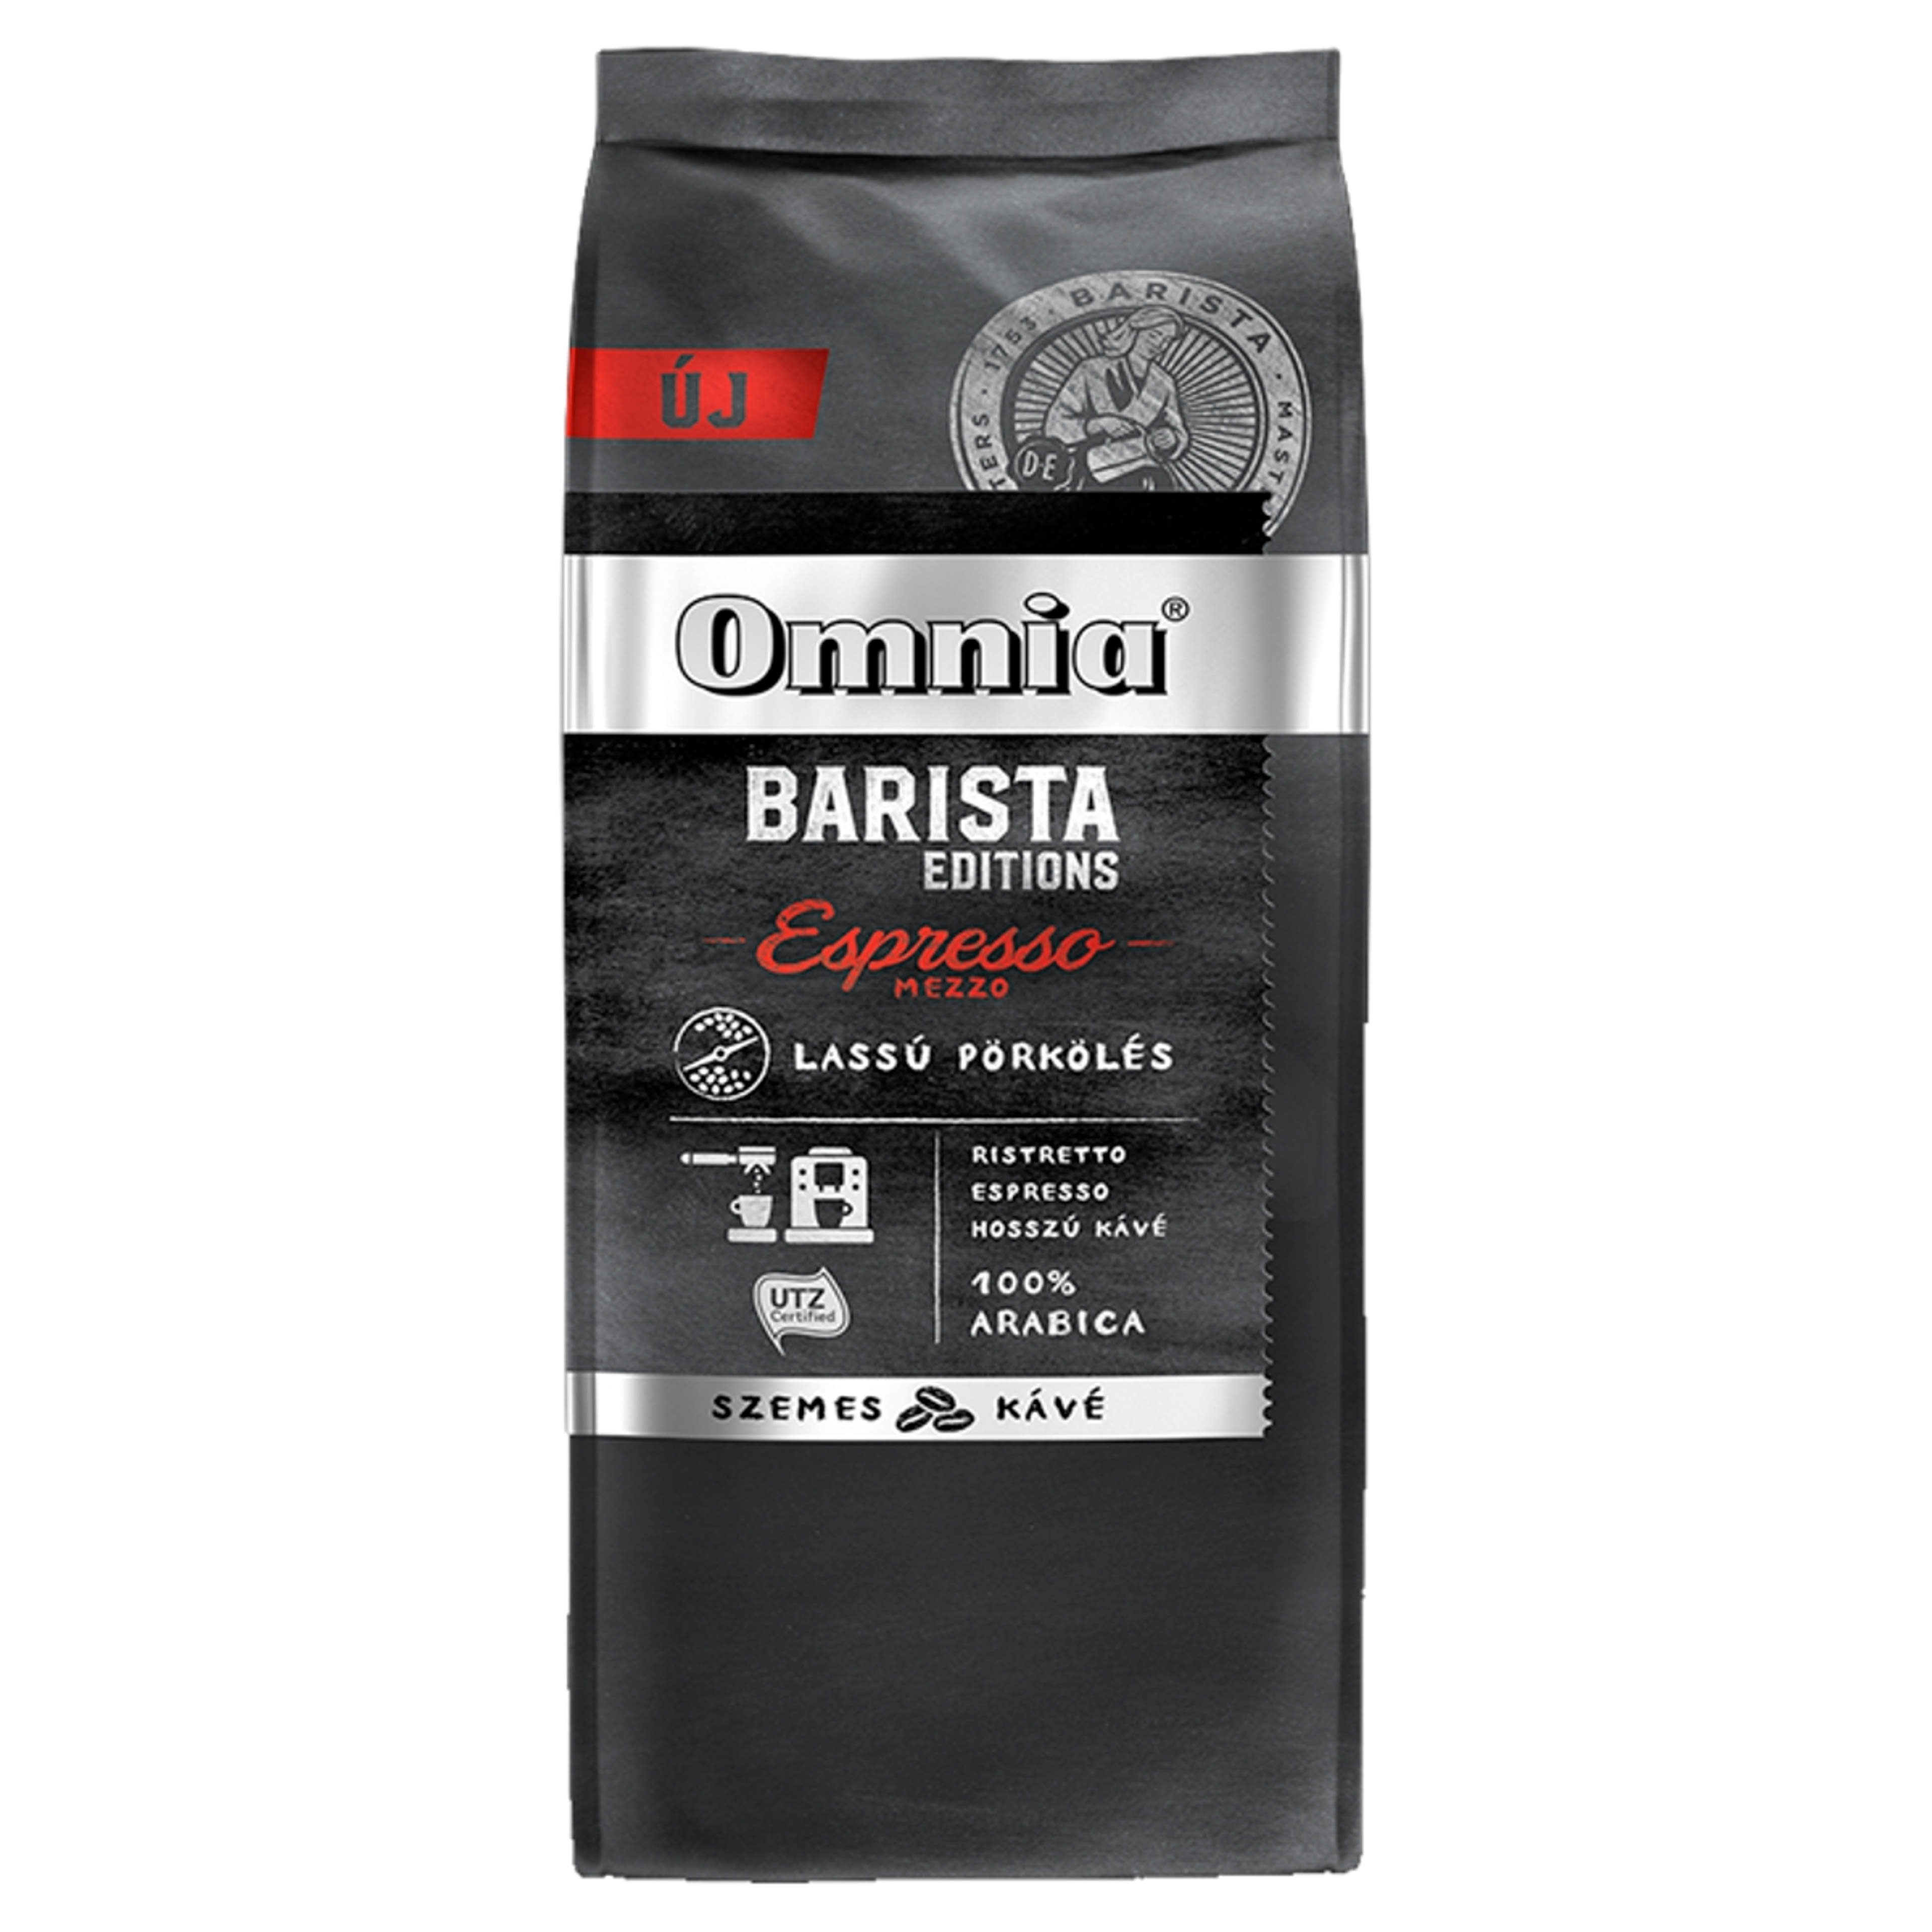 Douwe Egberts Omnia Barista Edition Espresso Mezzo szemes kávé - 900 g-1